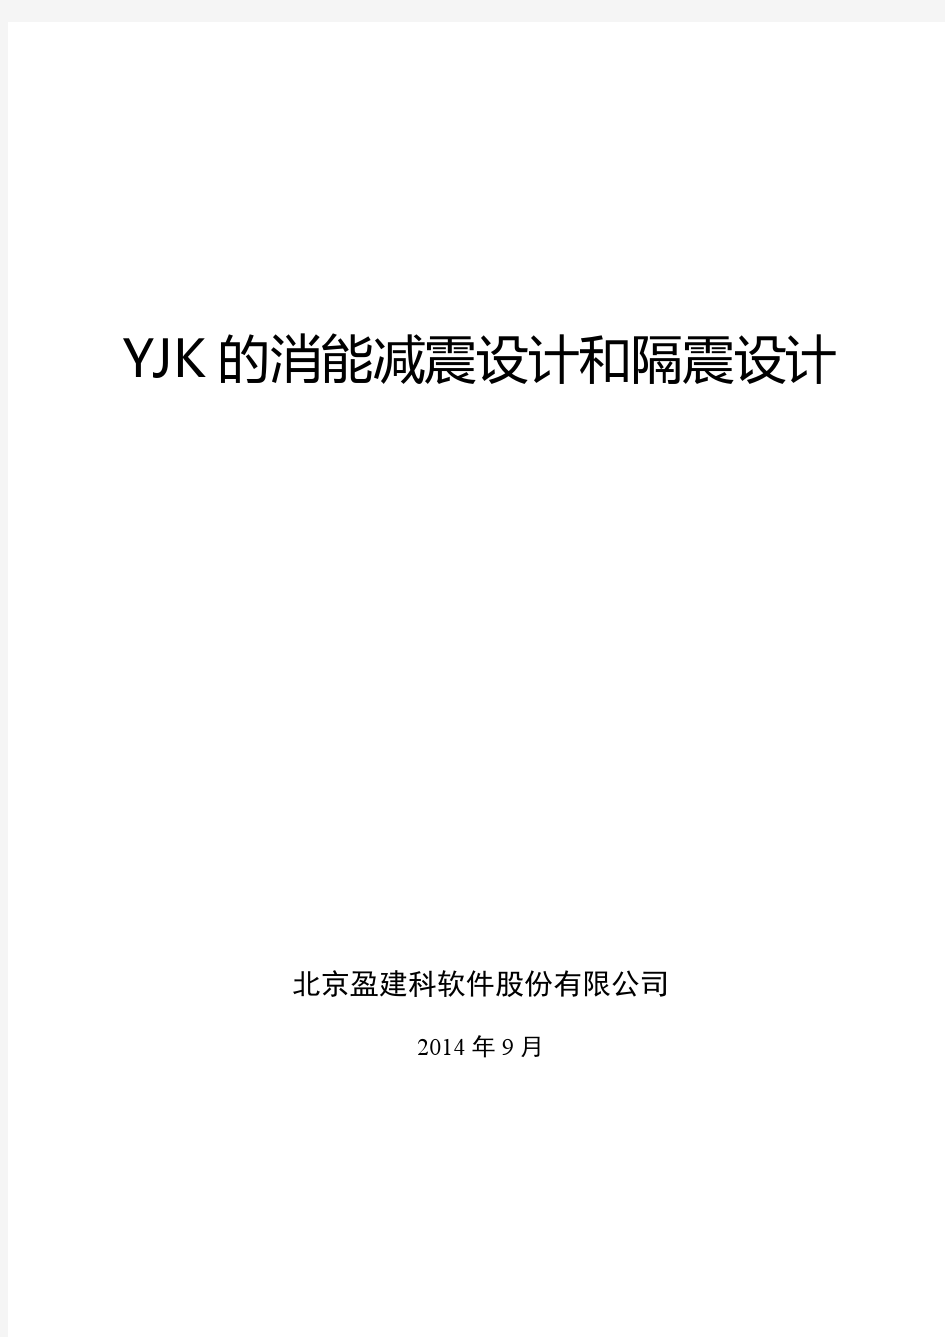 YJK的消能减震设计和隔振设计0905